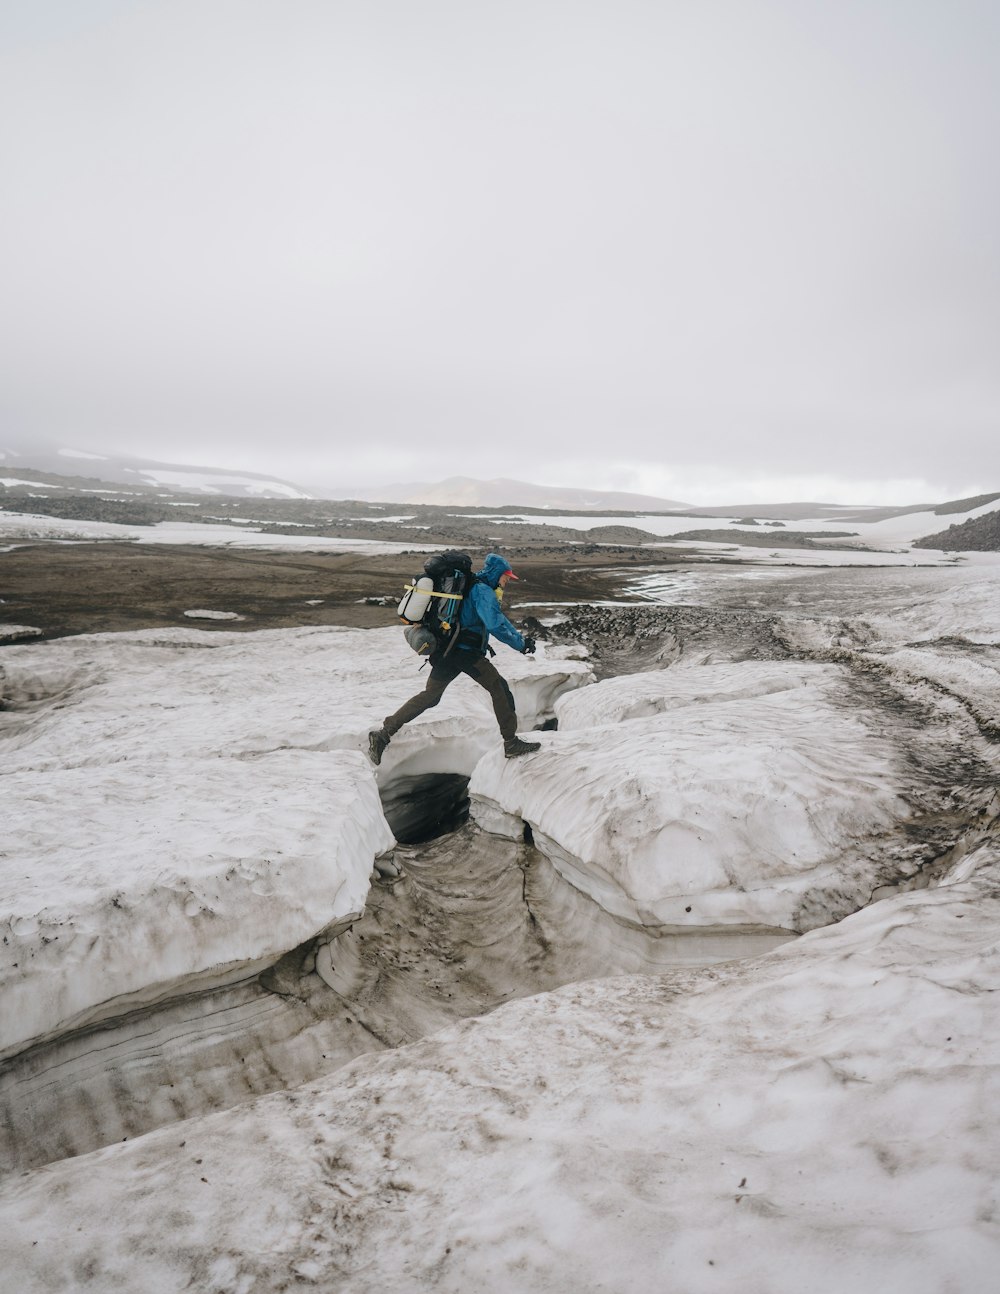 person waering teal jacket walking on icy surface